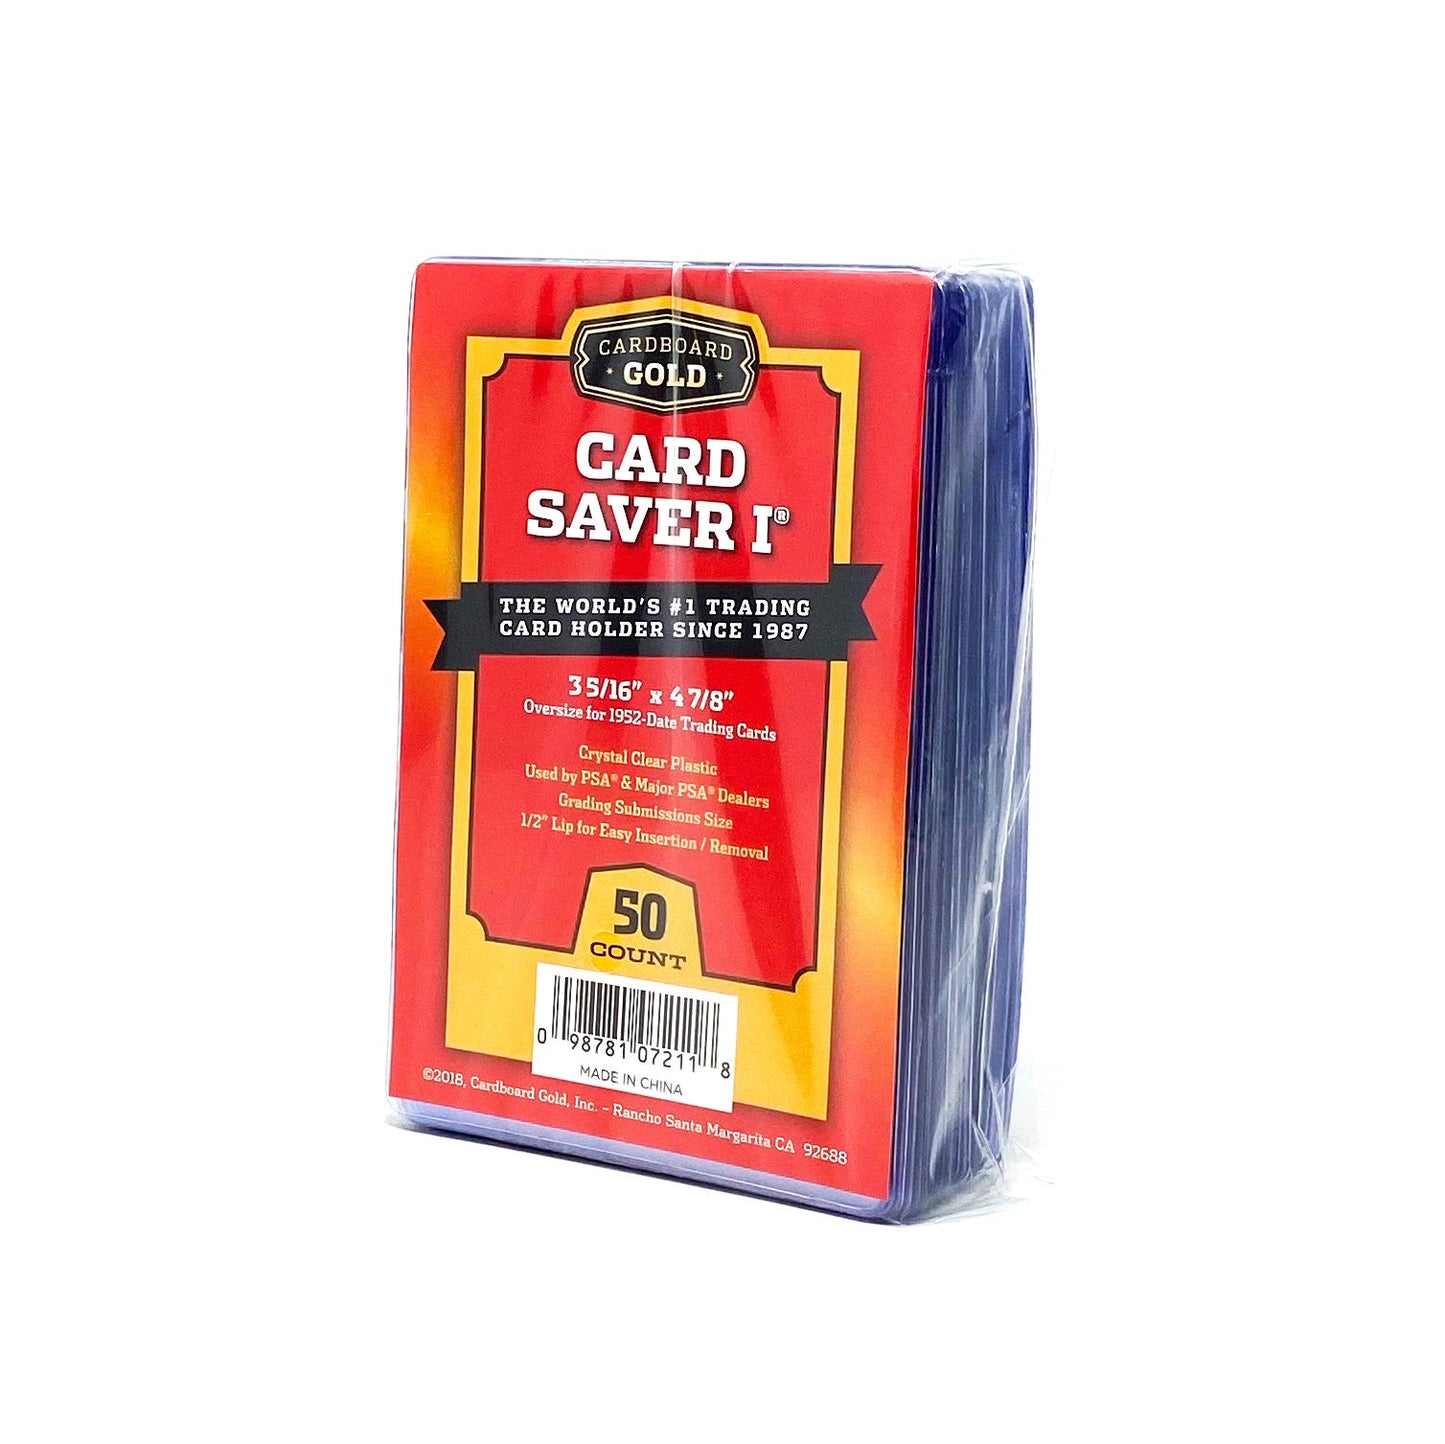 Cardboard Gold Card Saver 1 Semi Rigid Card Holder